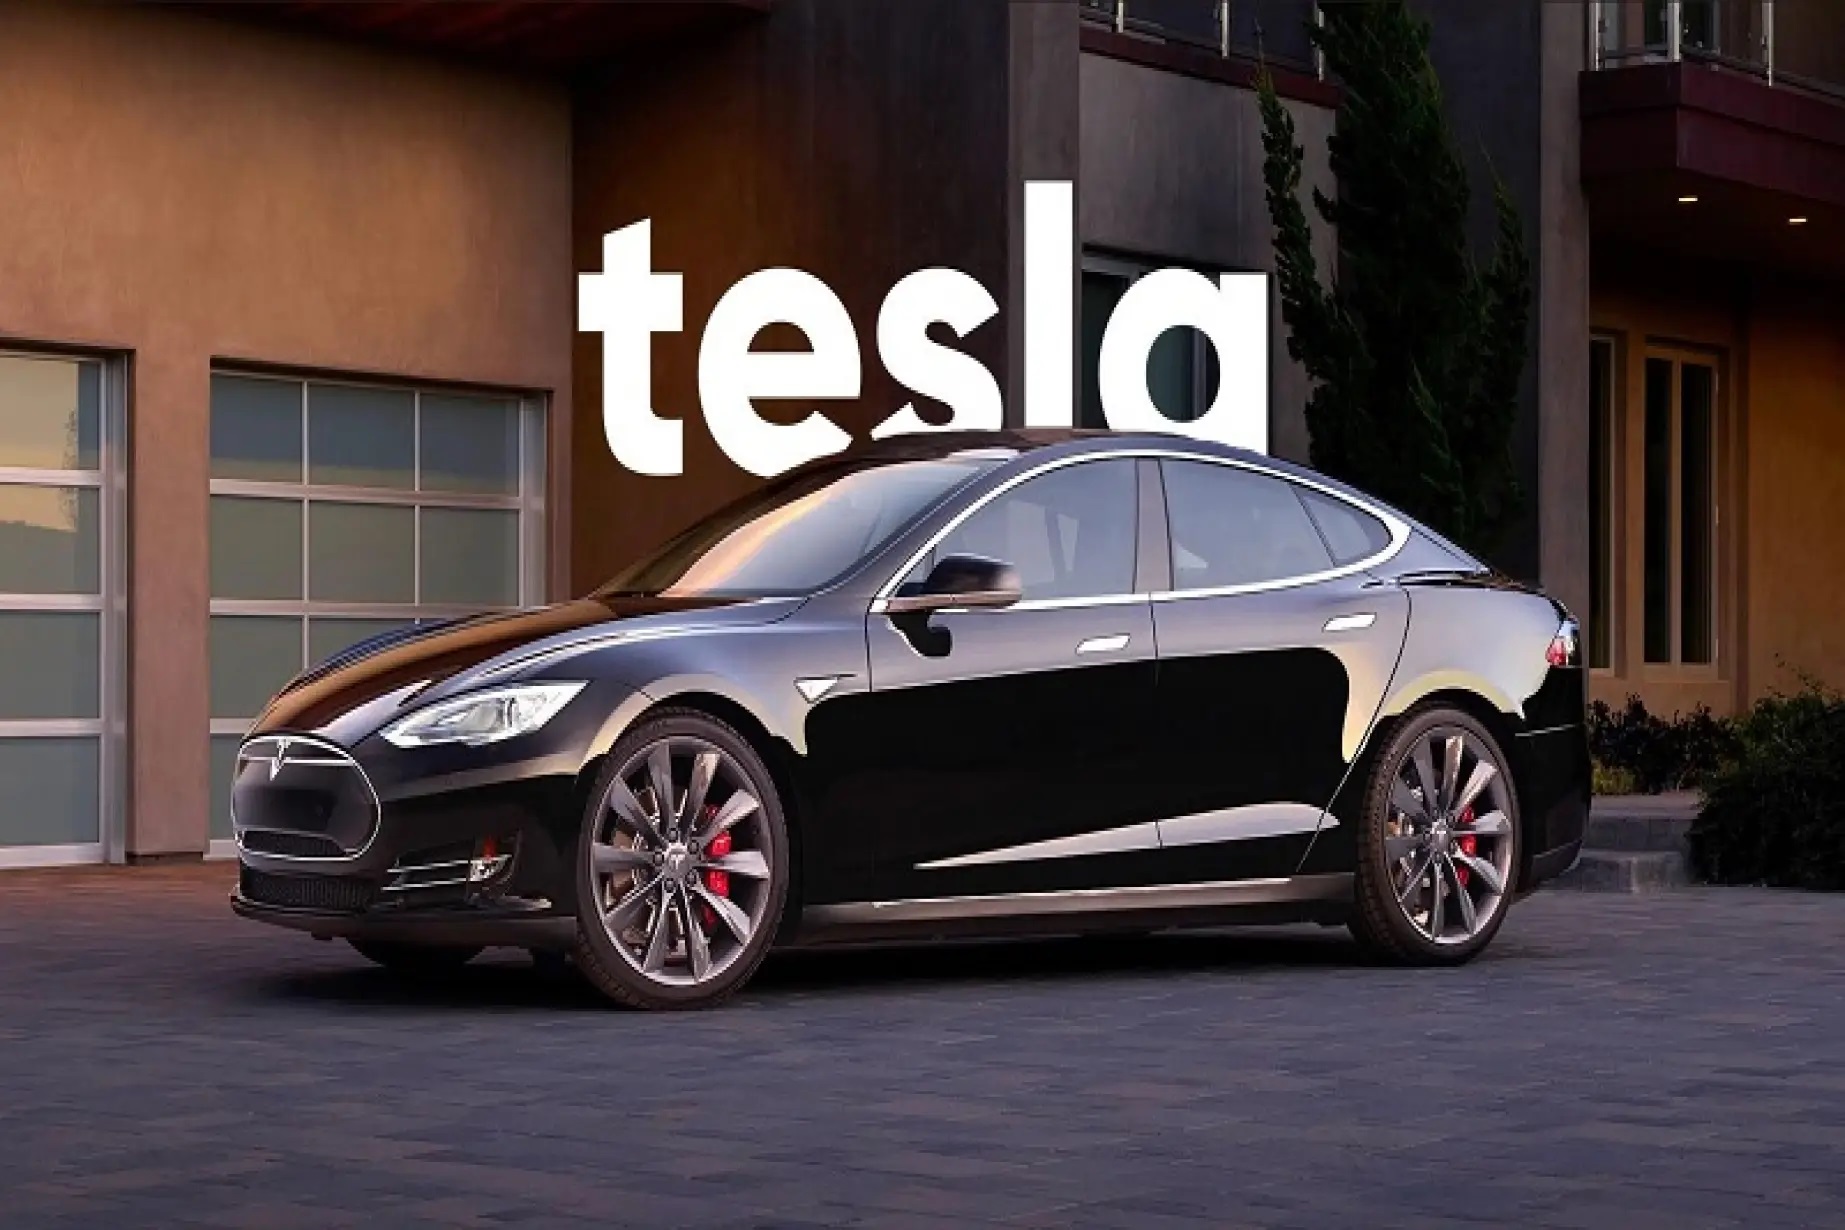 Tesla Car 2 1 - هدف قیمت تسلا توسط UBS دو برابر شد